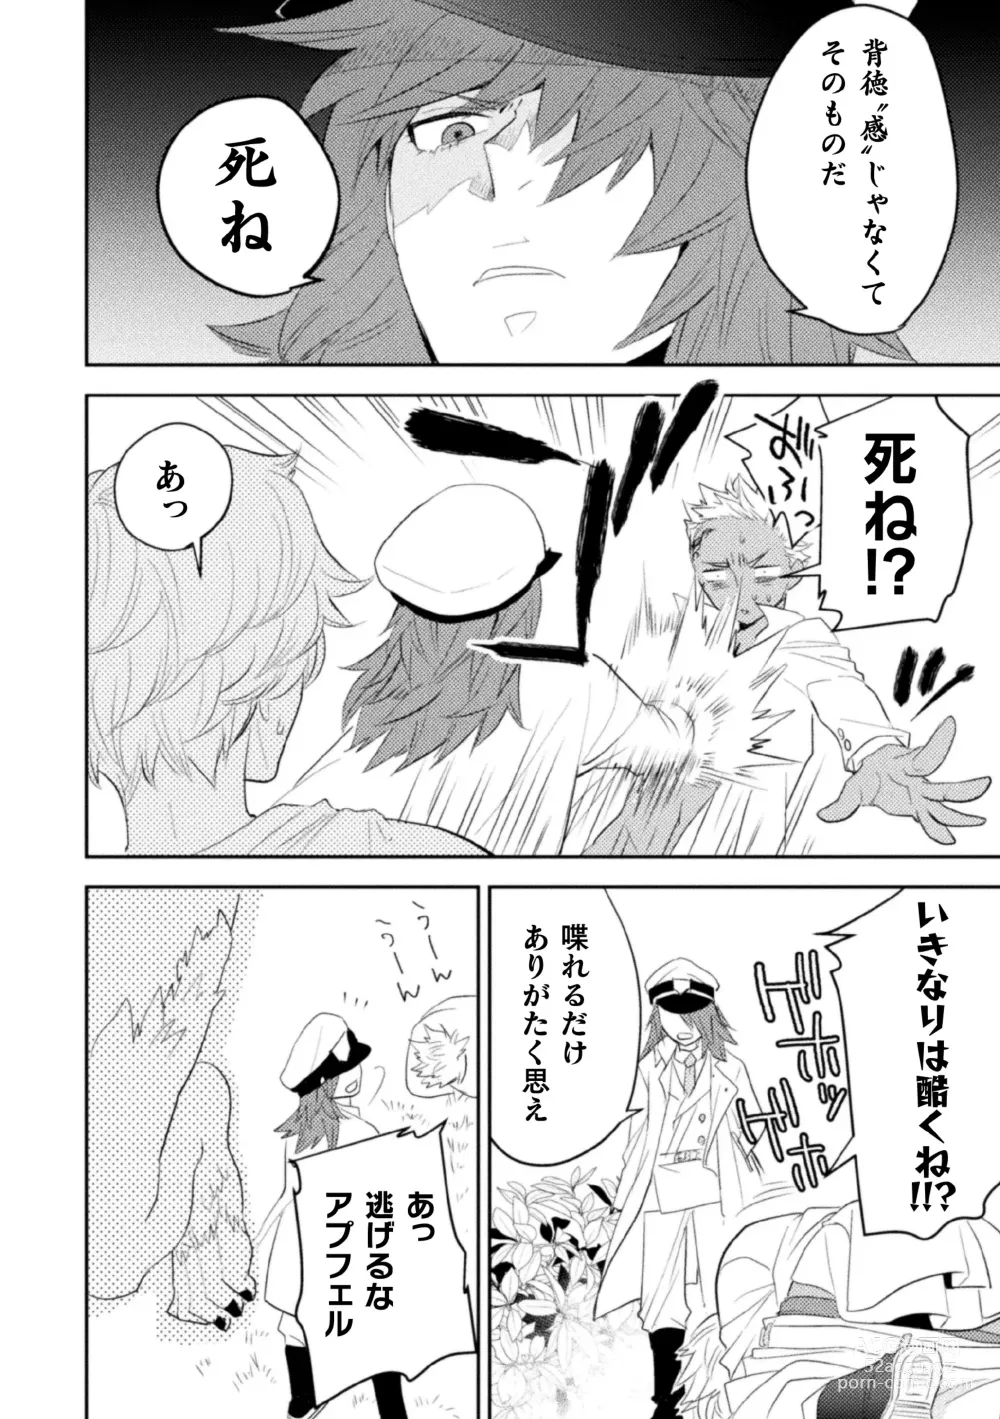 Page 8 of manga Zekkai Rougoku 4 Zekkai no Ori to Inma no Wana